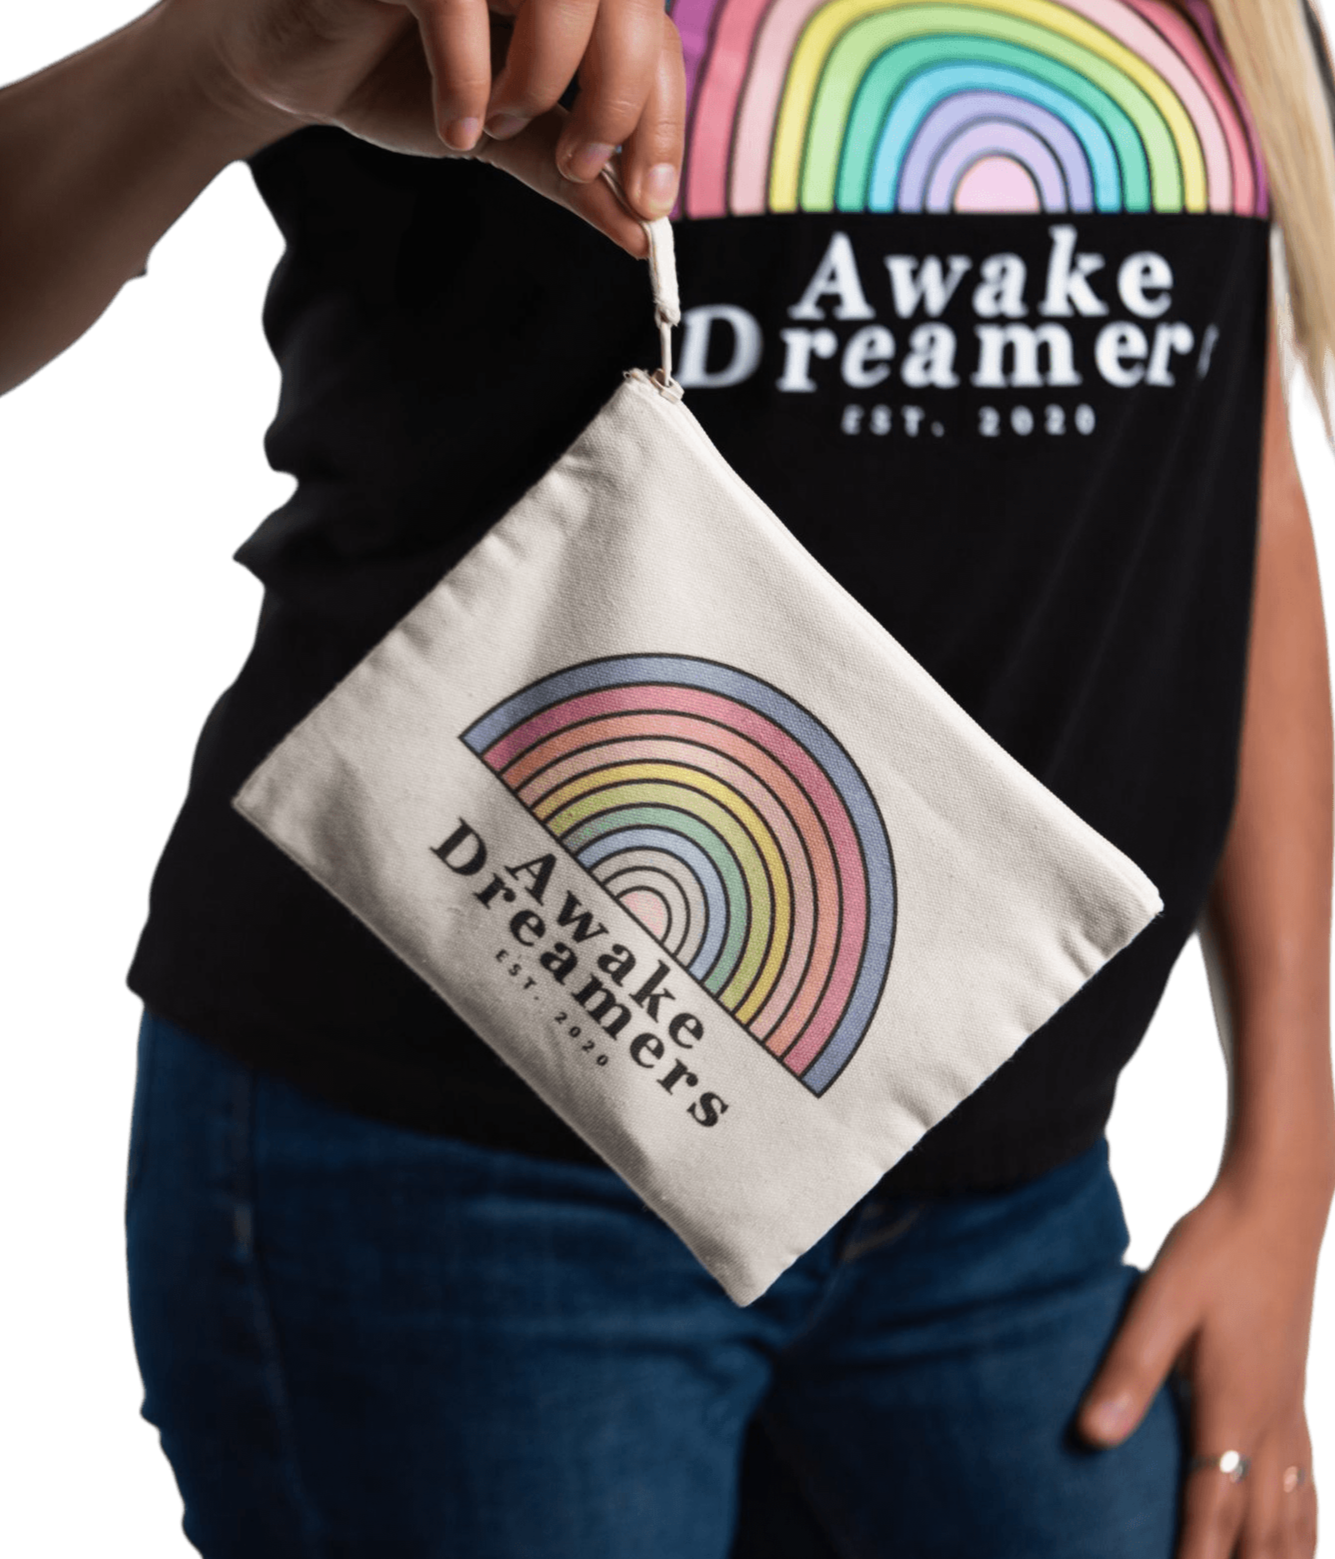 #Awake_Dreamers# - #premium_ethical_sustainable_organic_clothing#